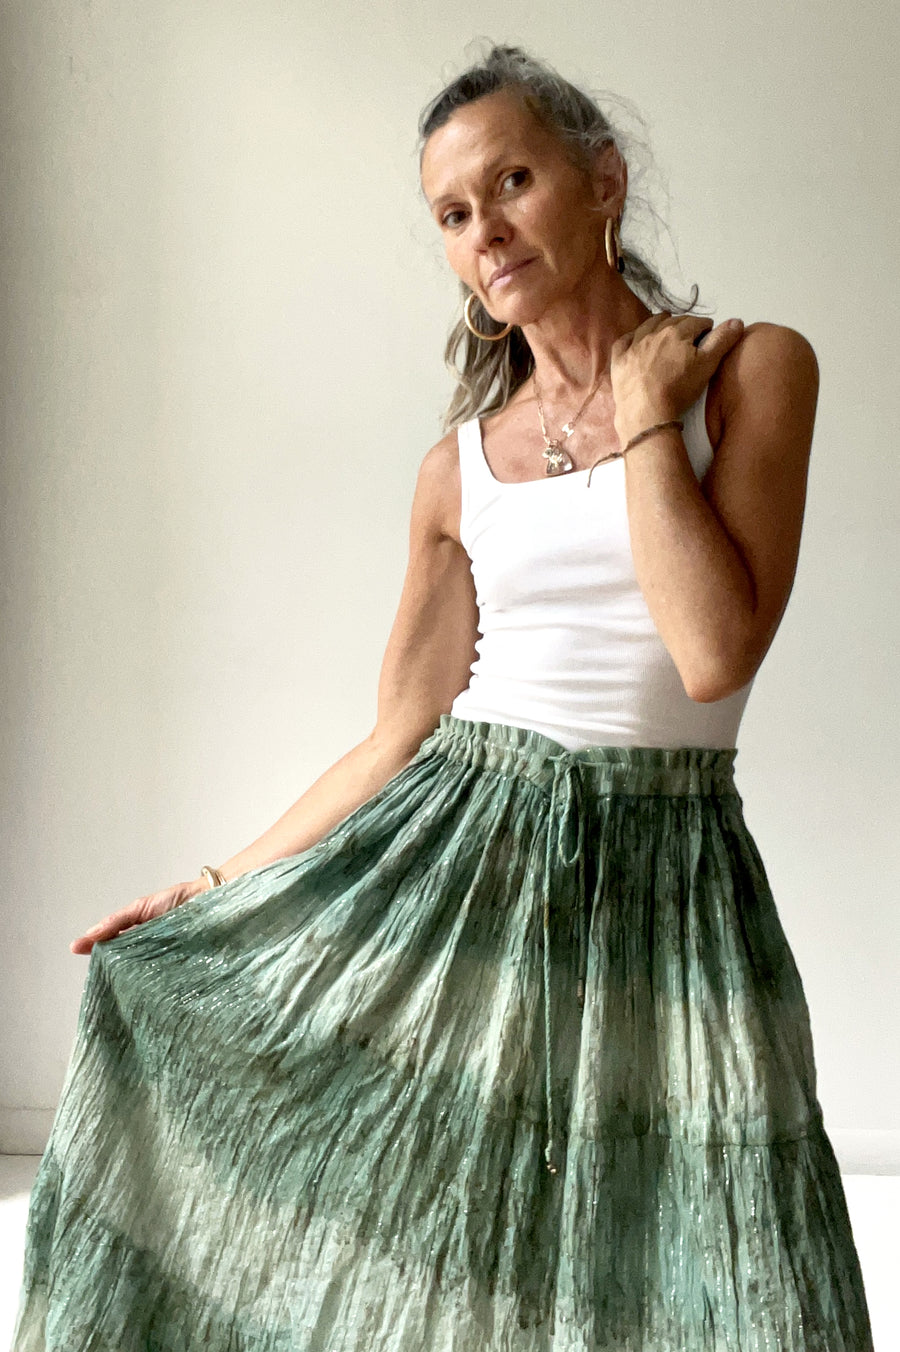 Vintage Green Maxi Skirt with Metallic Thread